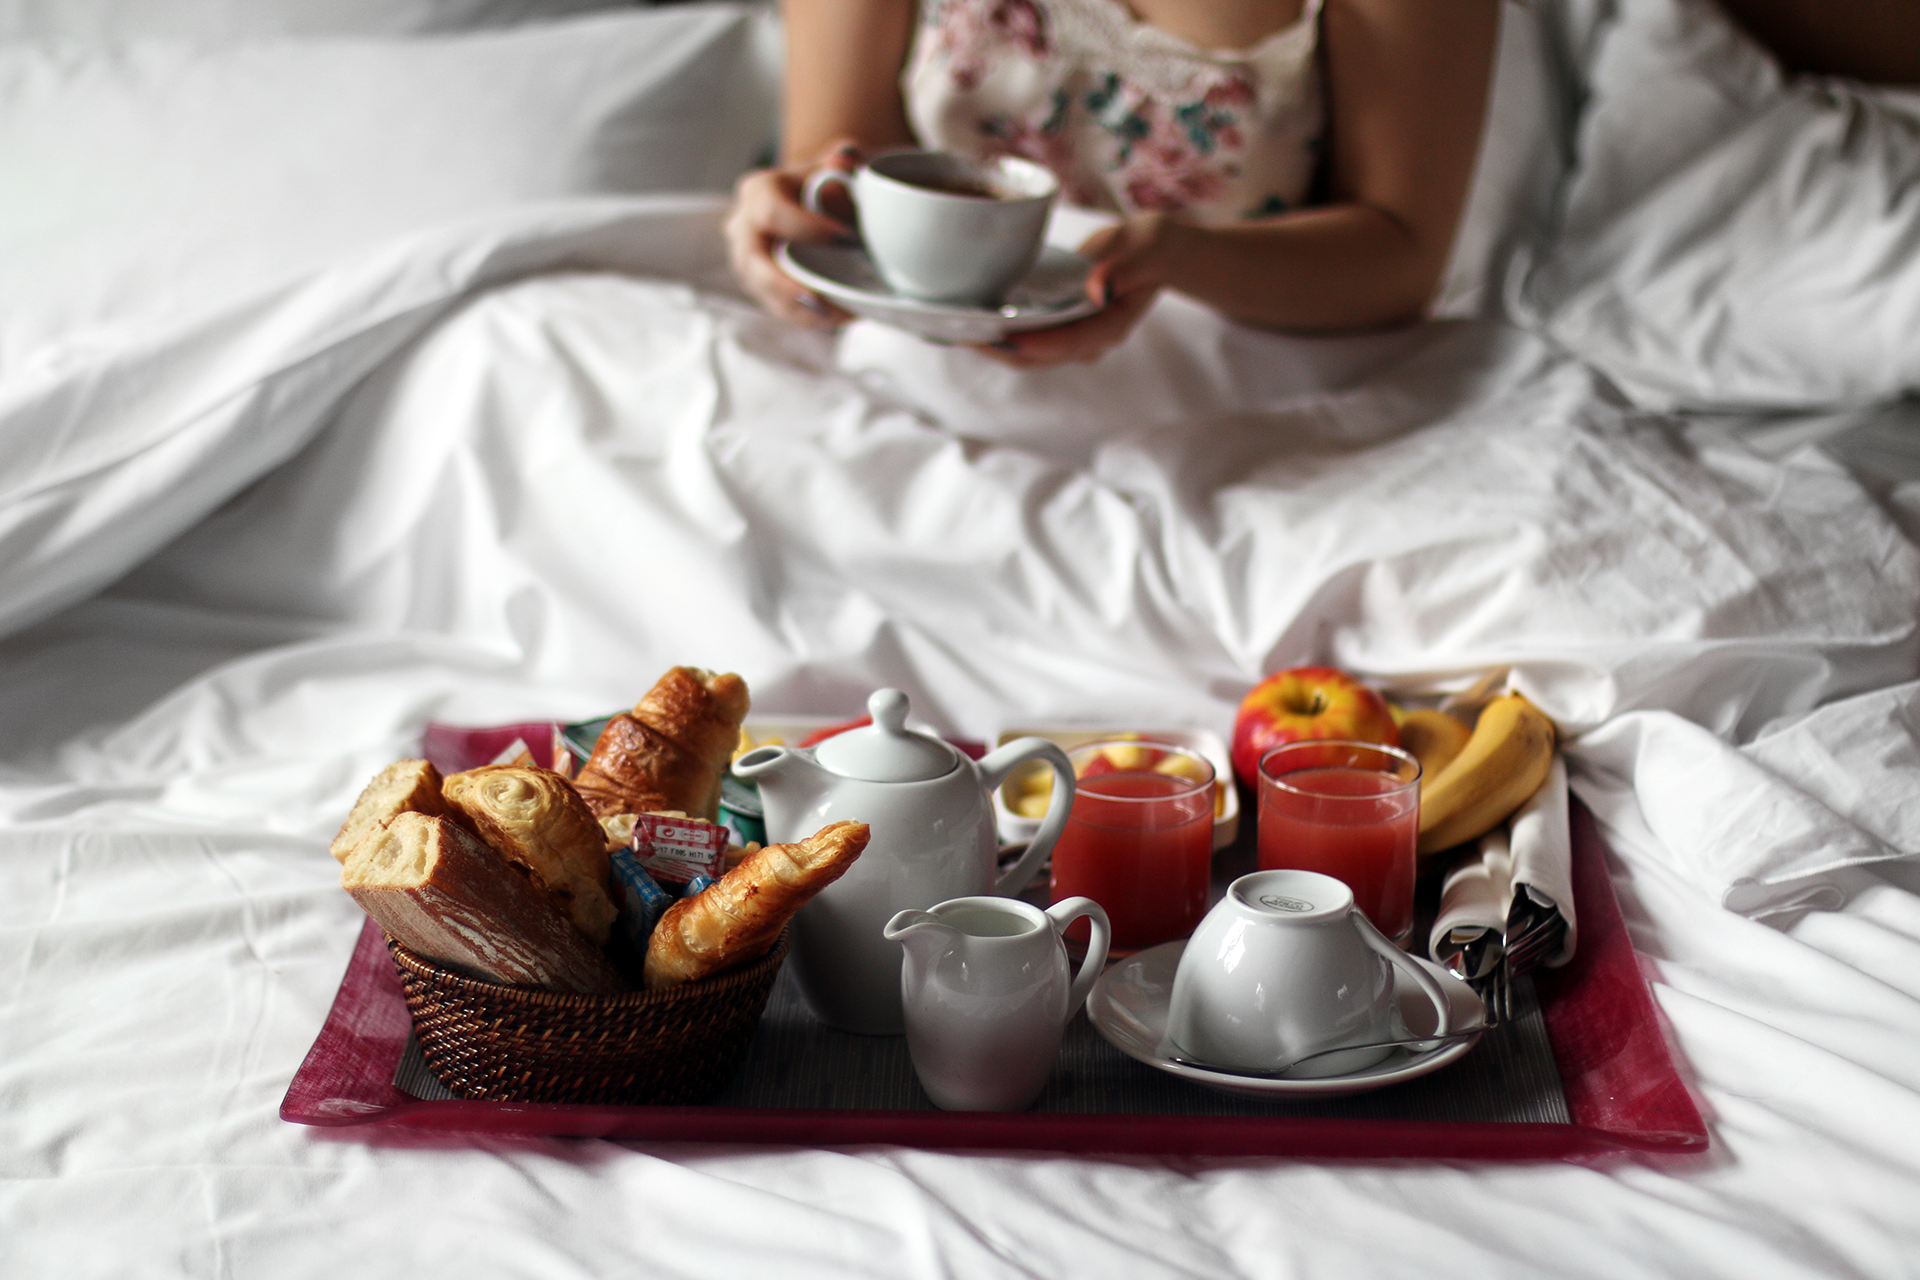 Кофе после завтрака. Завтрак в постель. Кофе в постель. Завтрак с любимым. Кофе в постель любимому.